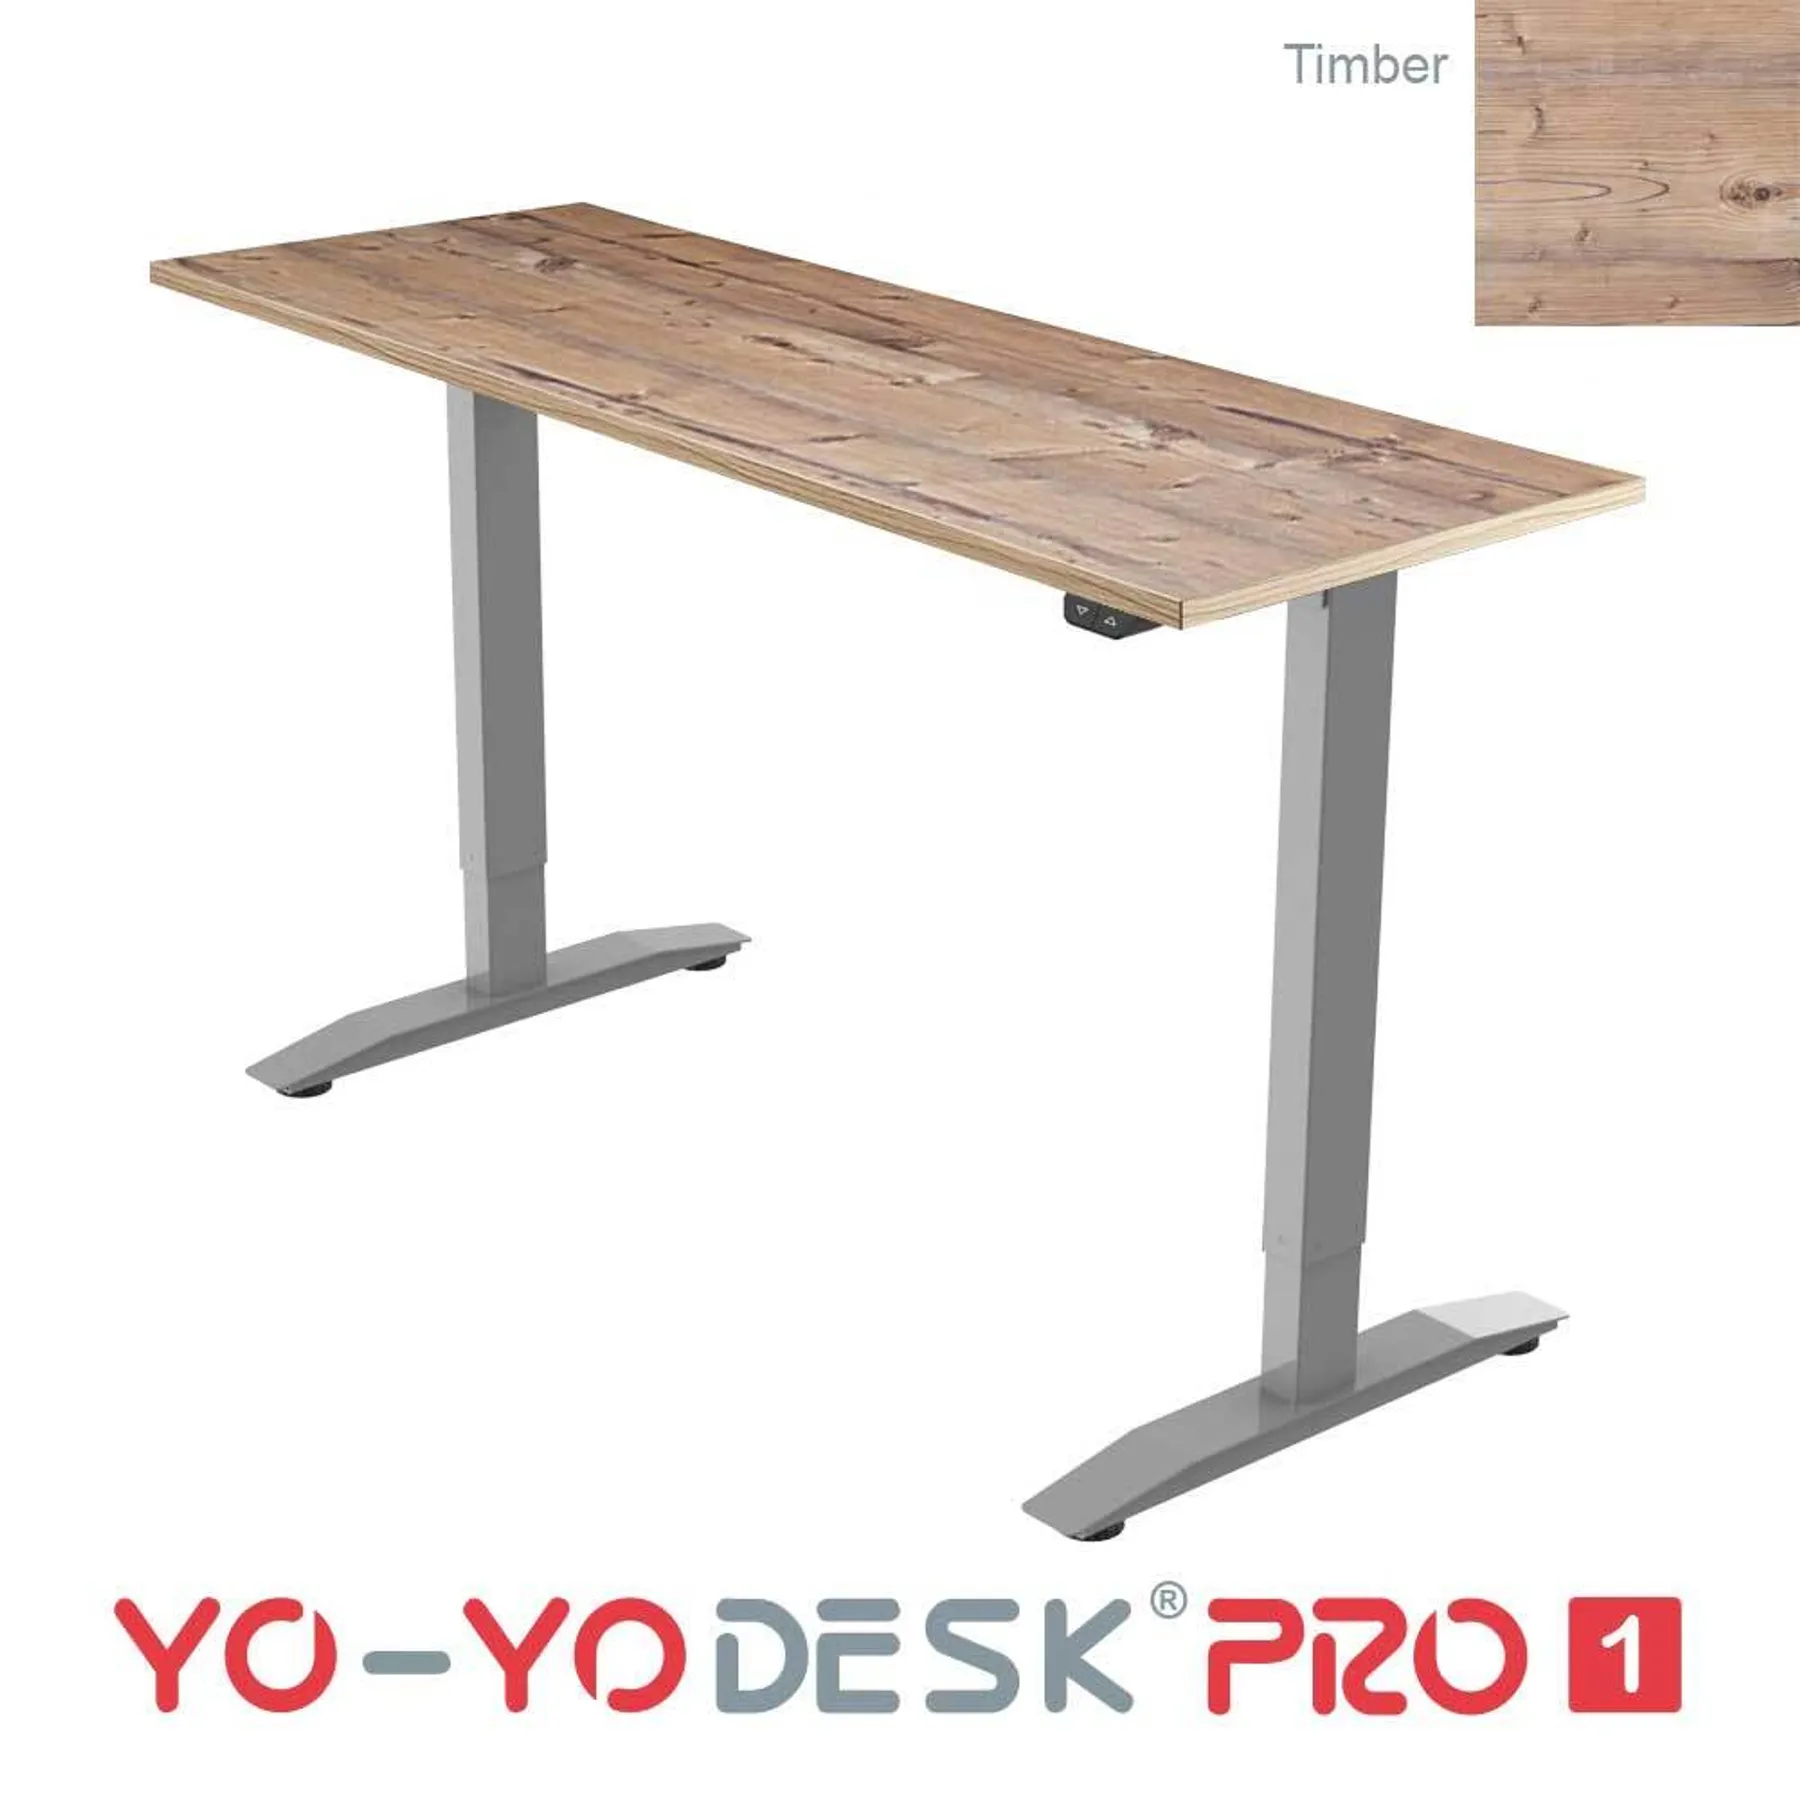 Lof direct yoyo desk pro 1 Chrome frame timber top